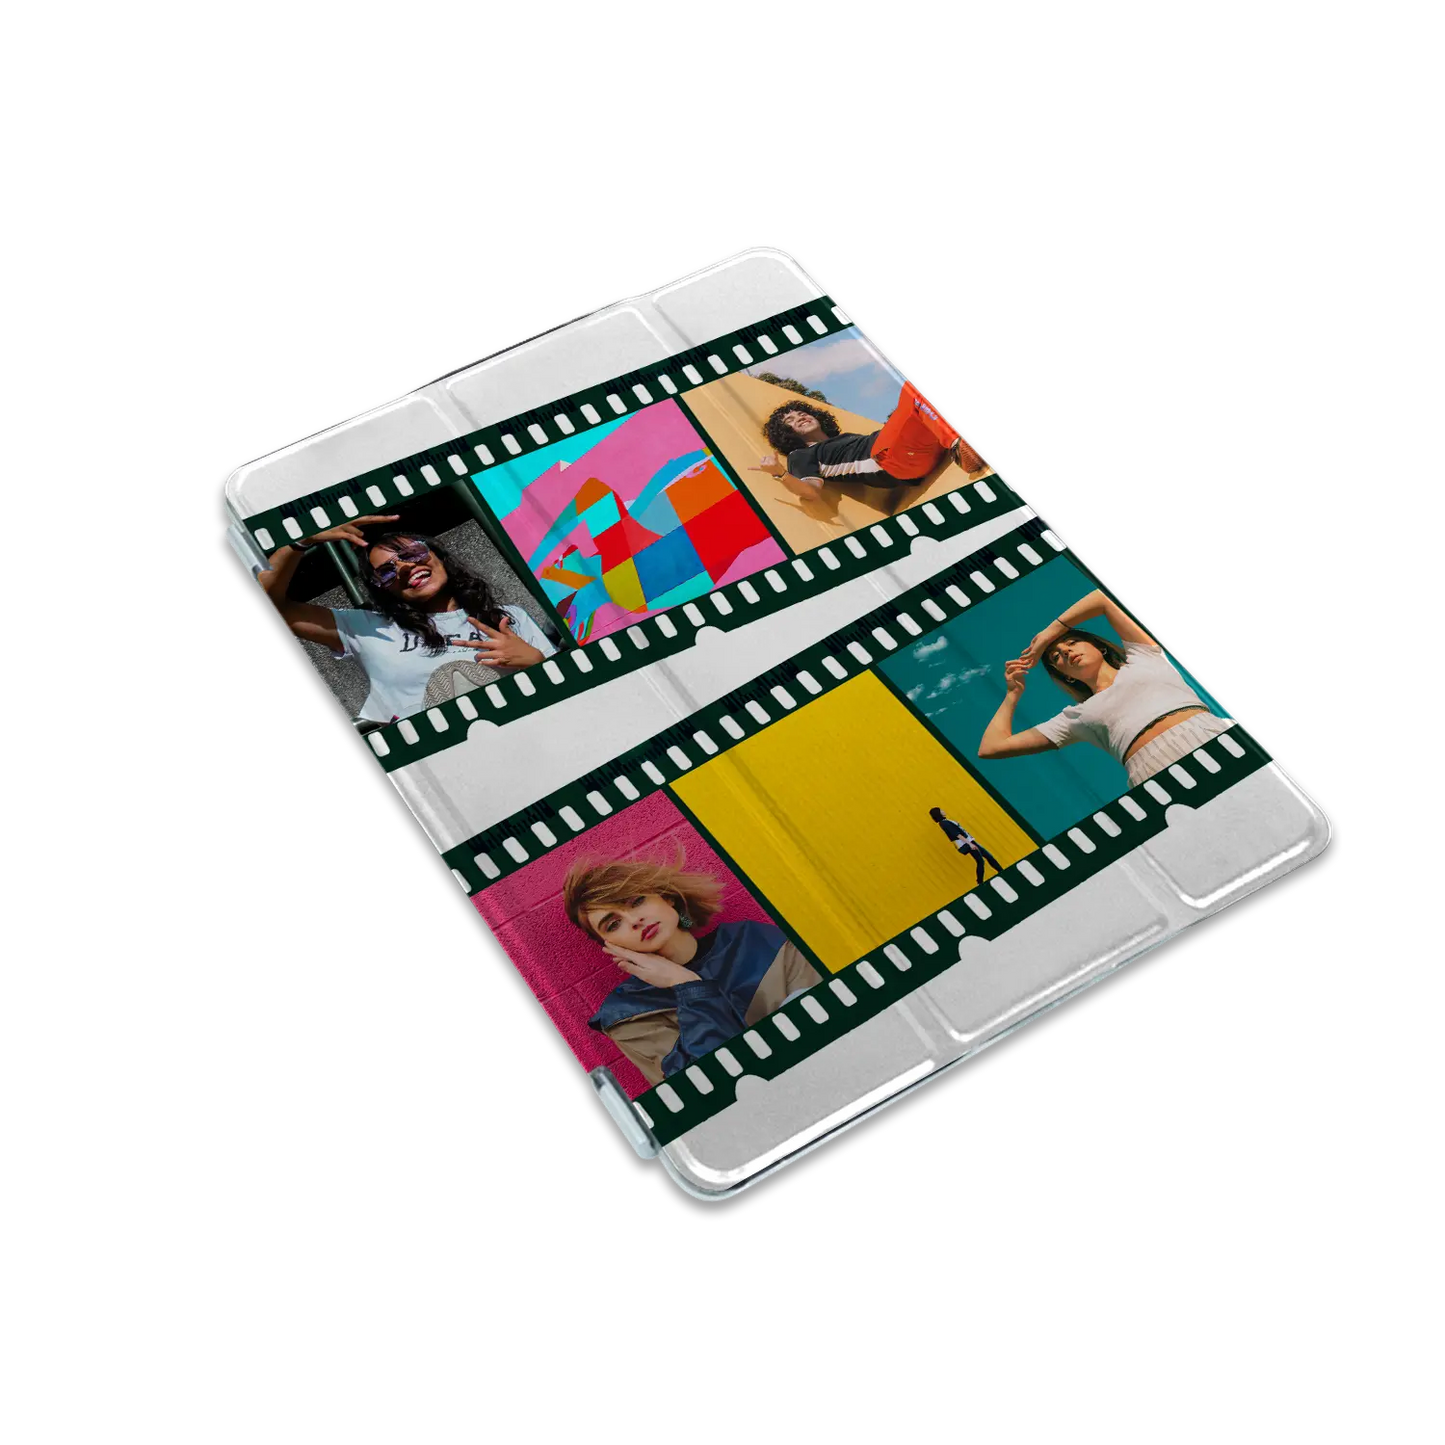 Endless Film - Custom iPad Case